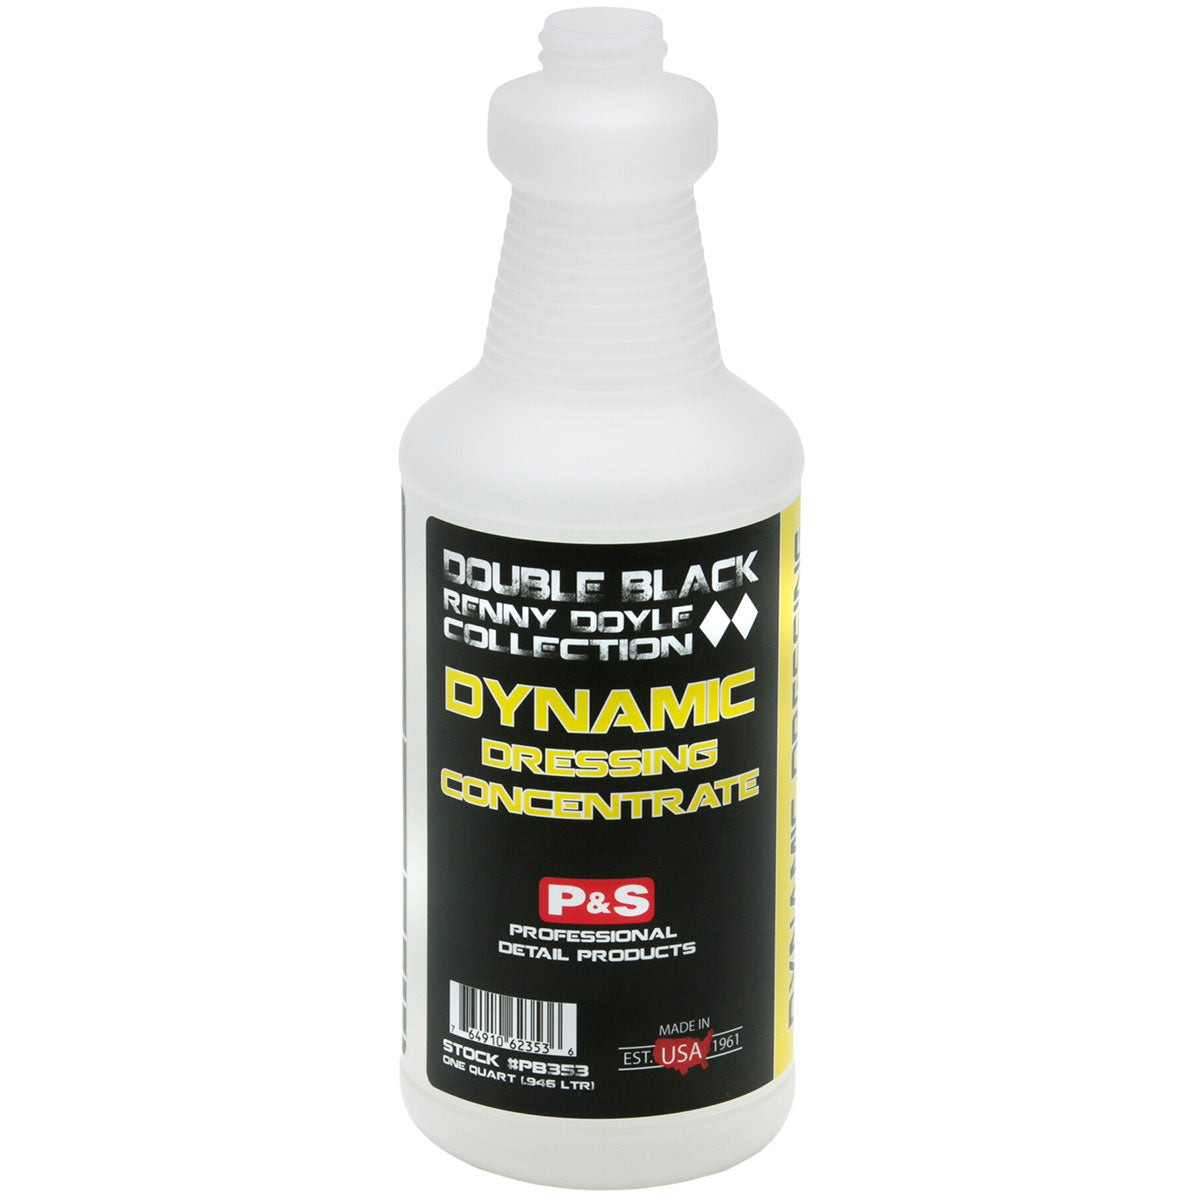 P&S Bead Maker 32oz Empty Spray Bottle | Chemical Resistant Trigger